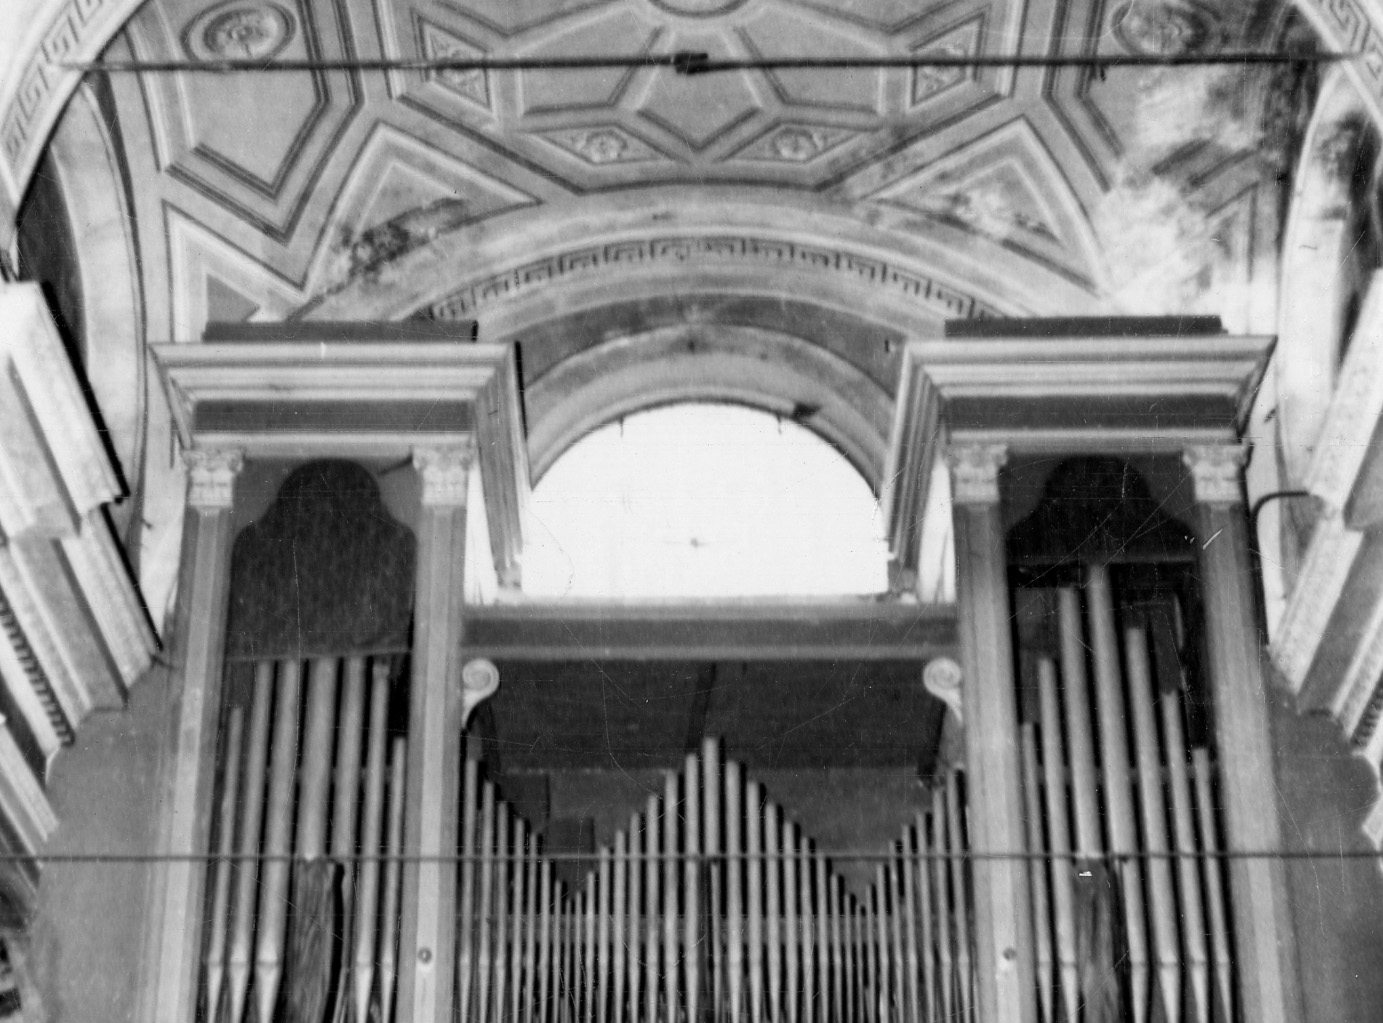 organo - scuola organara piemontese (seconda metà sec. XIX)